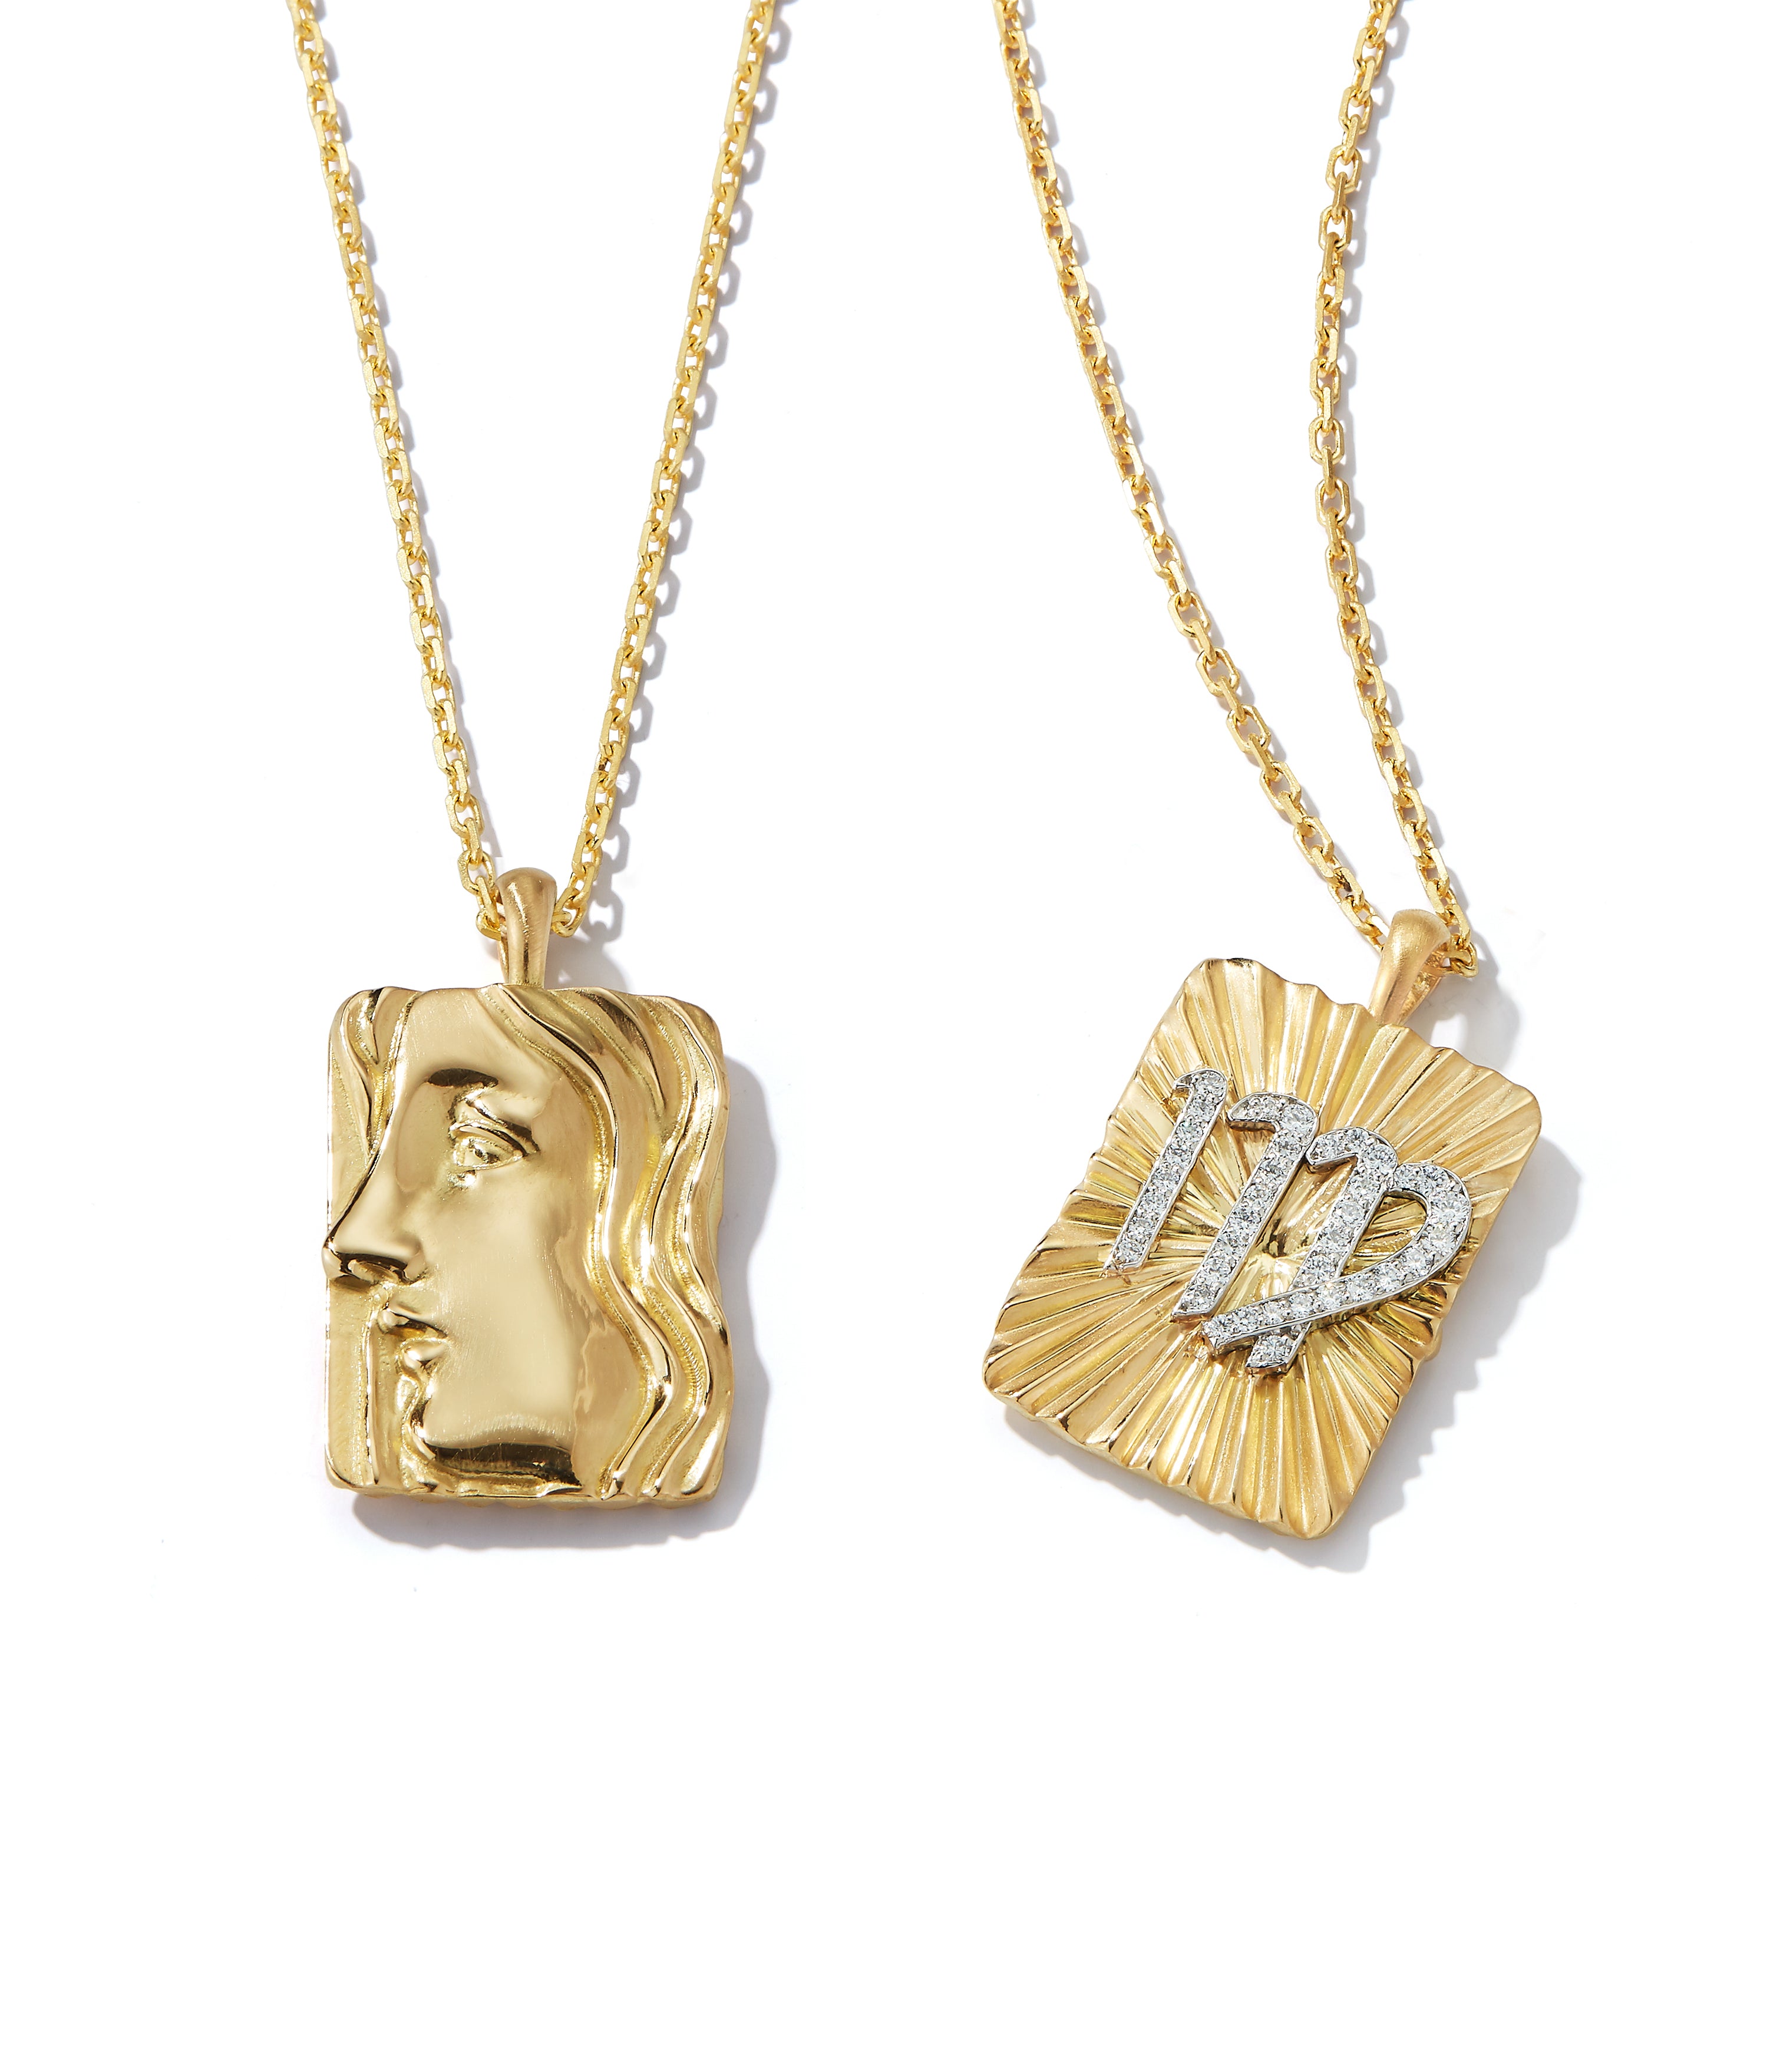 Virgo Zodiac Webb York New Diamond | Necklace Pendant David